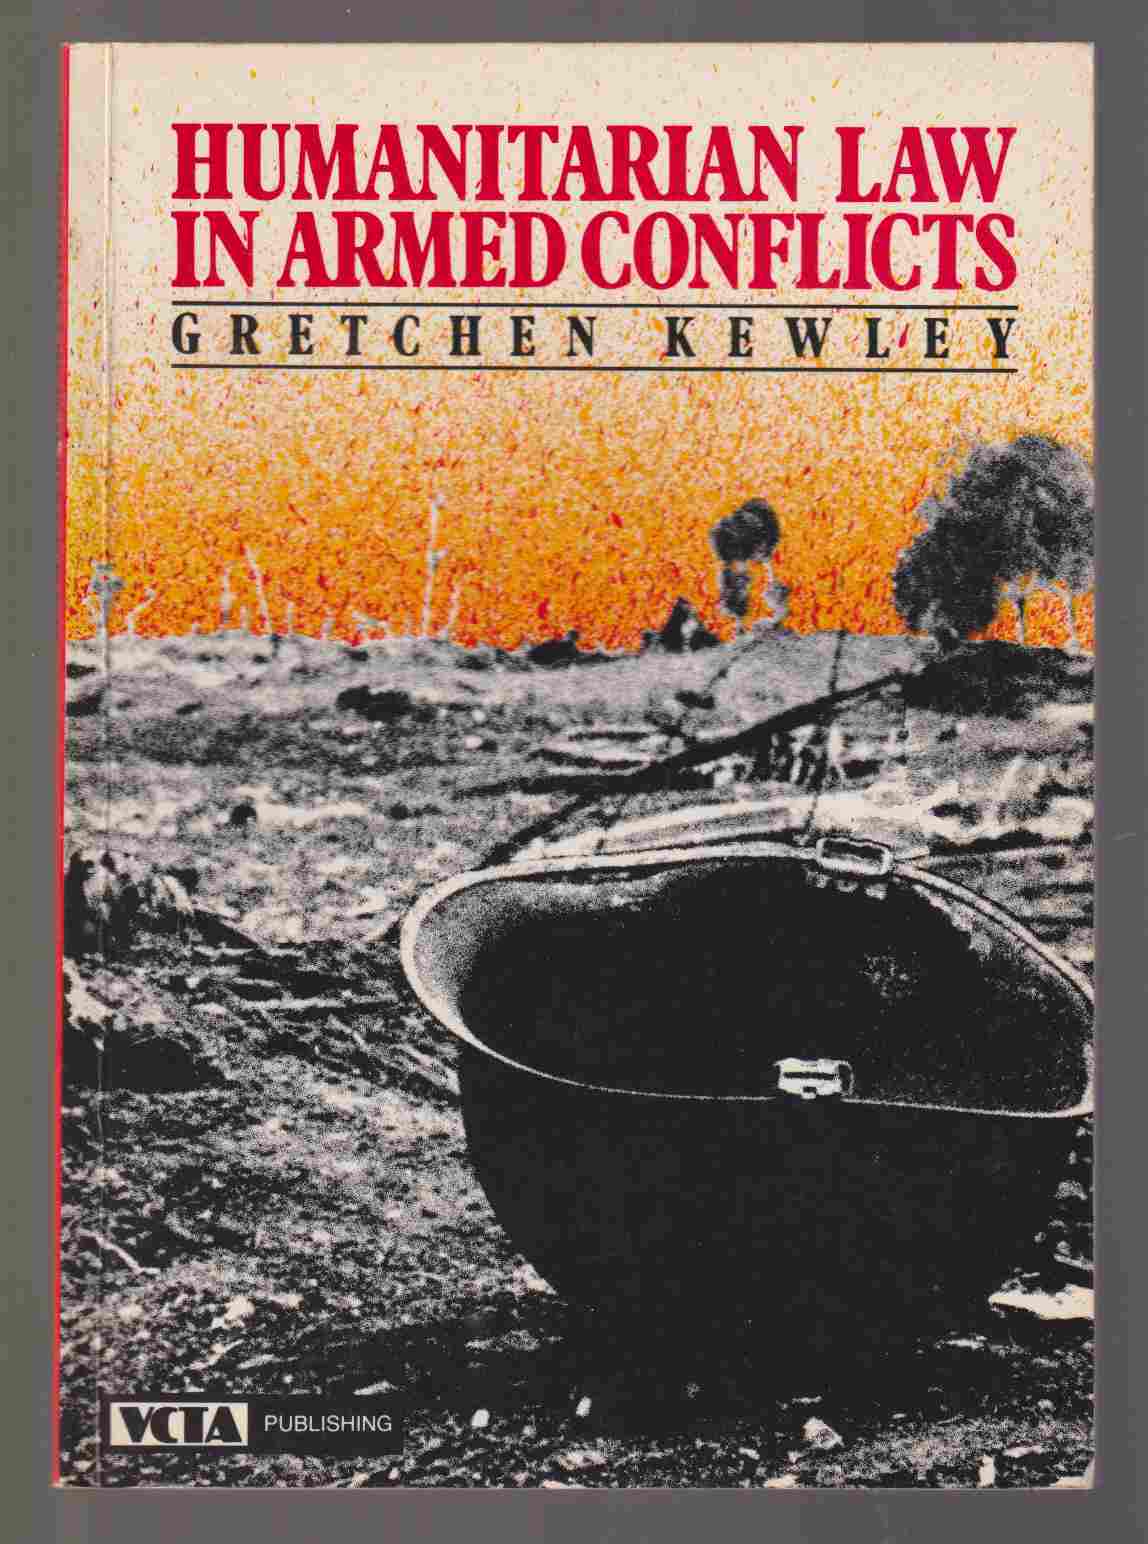 international armed conflict international law